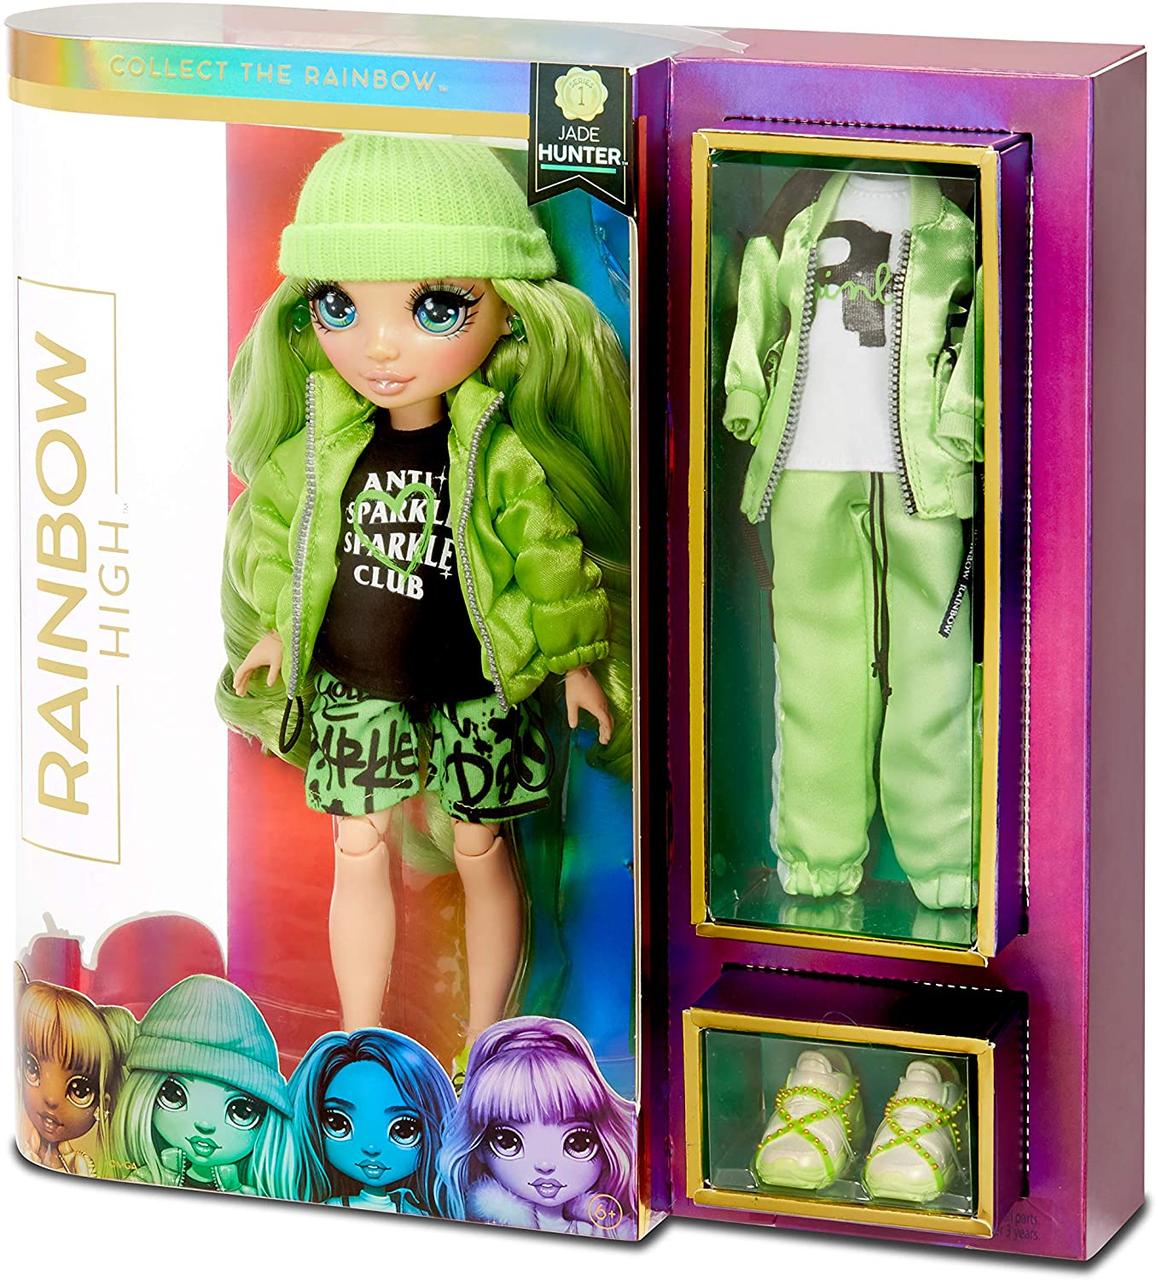 Rainbow High Rainbow Surprise Jade Hunter - Green Clothes Fashion Doll. Кукла Джейд Хантер